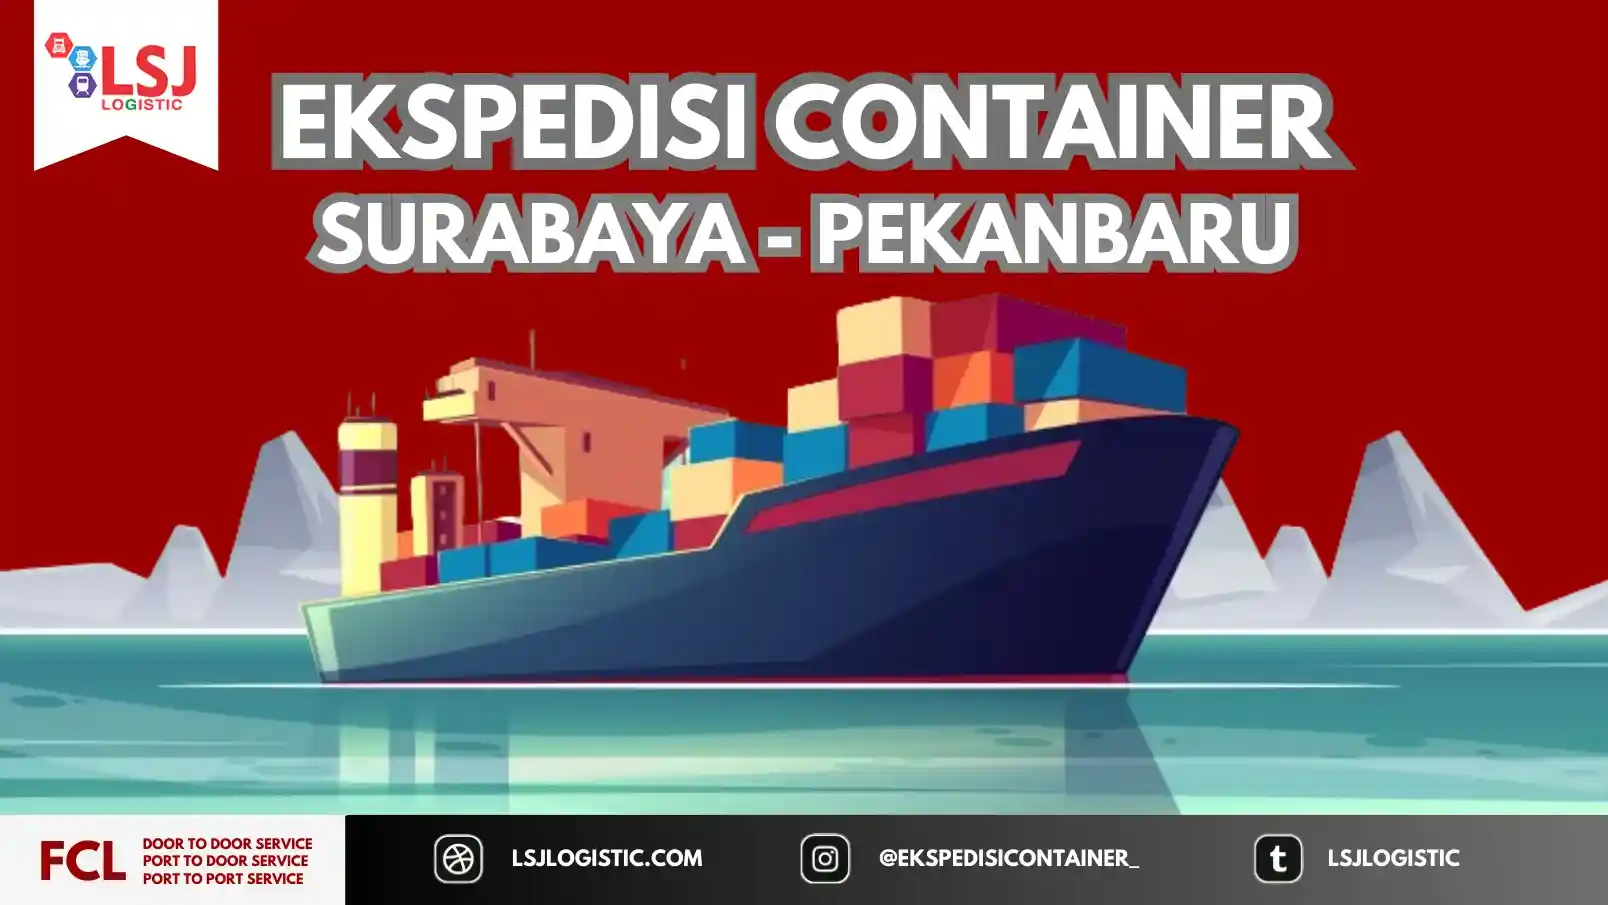 Ongkos Kirim Container Surabaya Pekanbaru